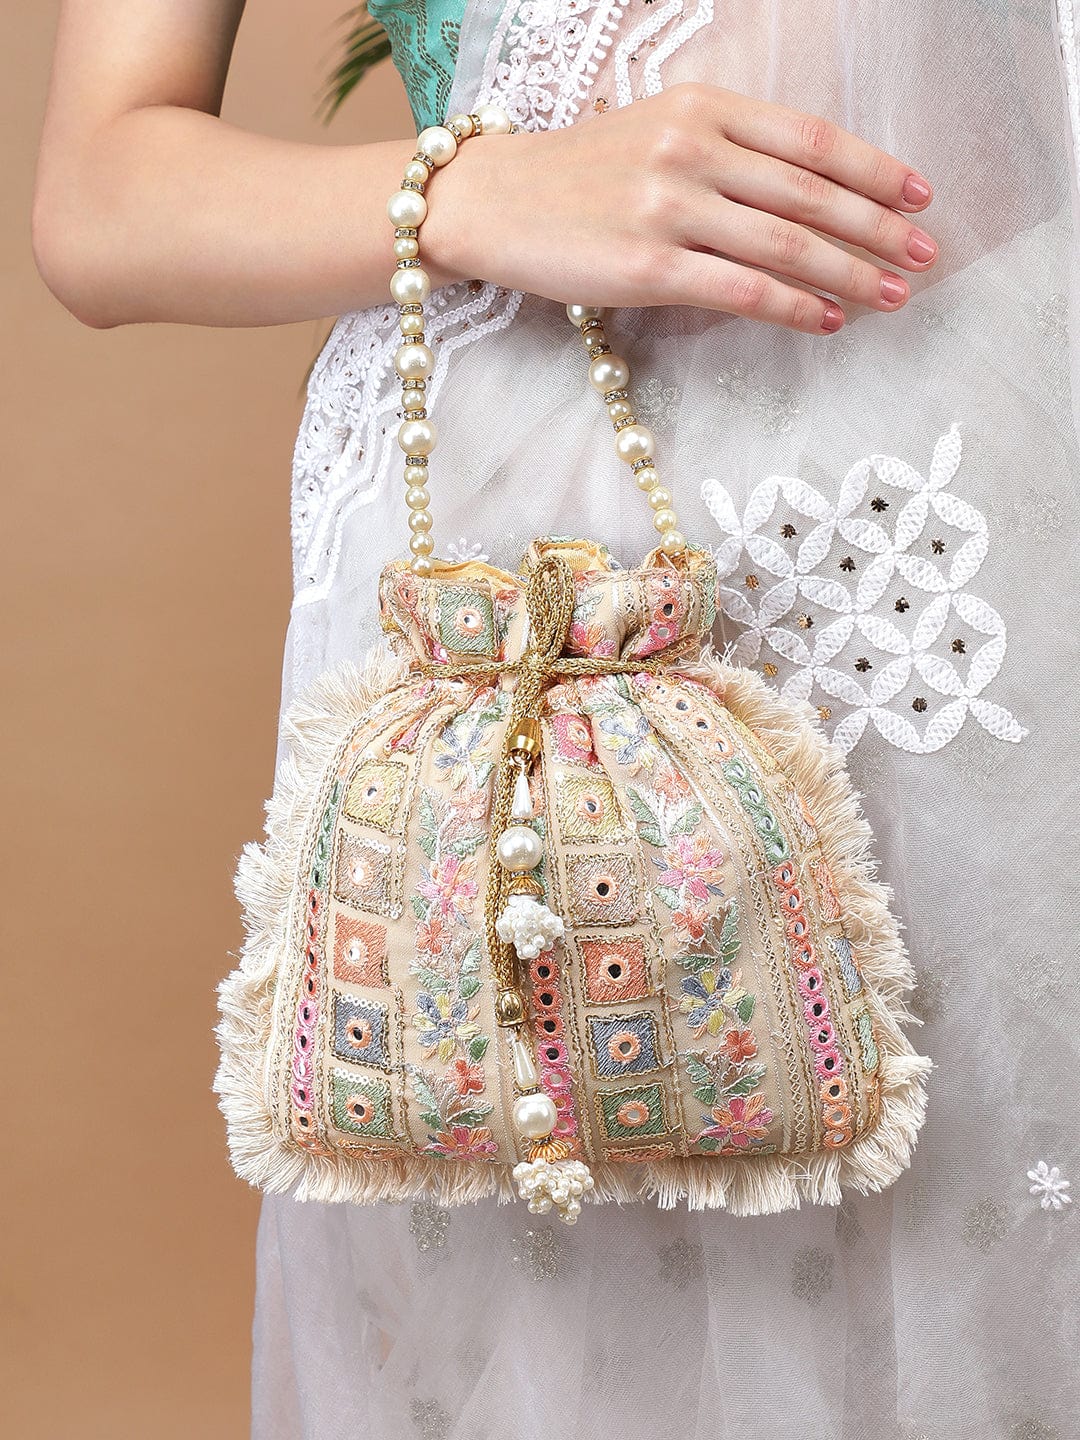 Buy Indian Potli Bag, Hand Embroidery, Handmade, Bridal Potli, Wedding Bag, Designer  Potli, Handbag Online in India - Etsy | Wedding bag, Beaded bags, Potli bags